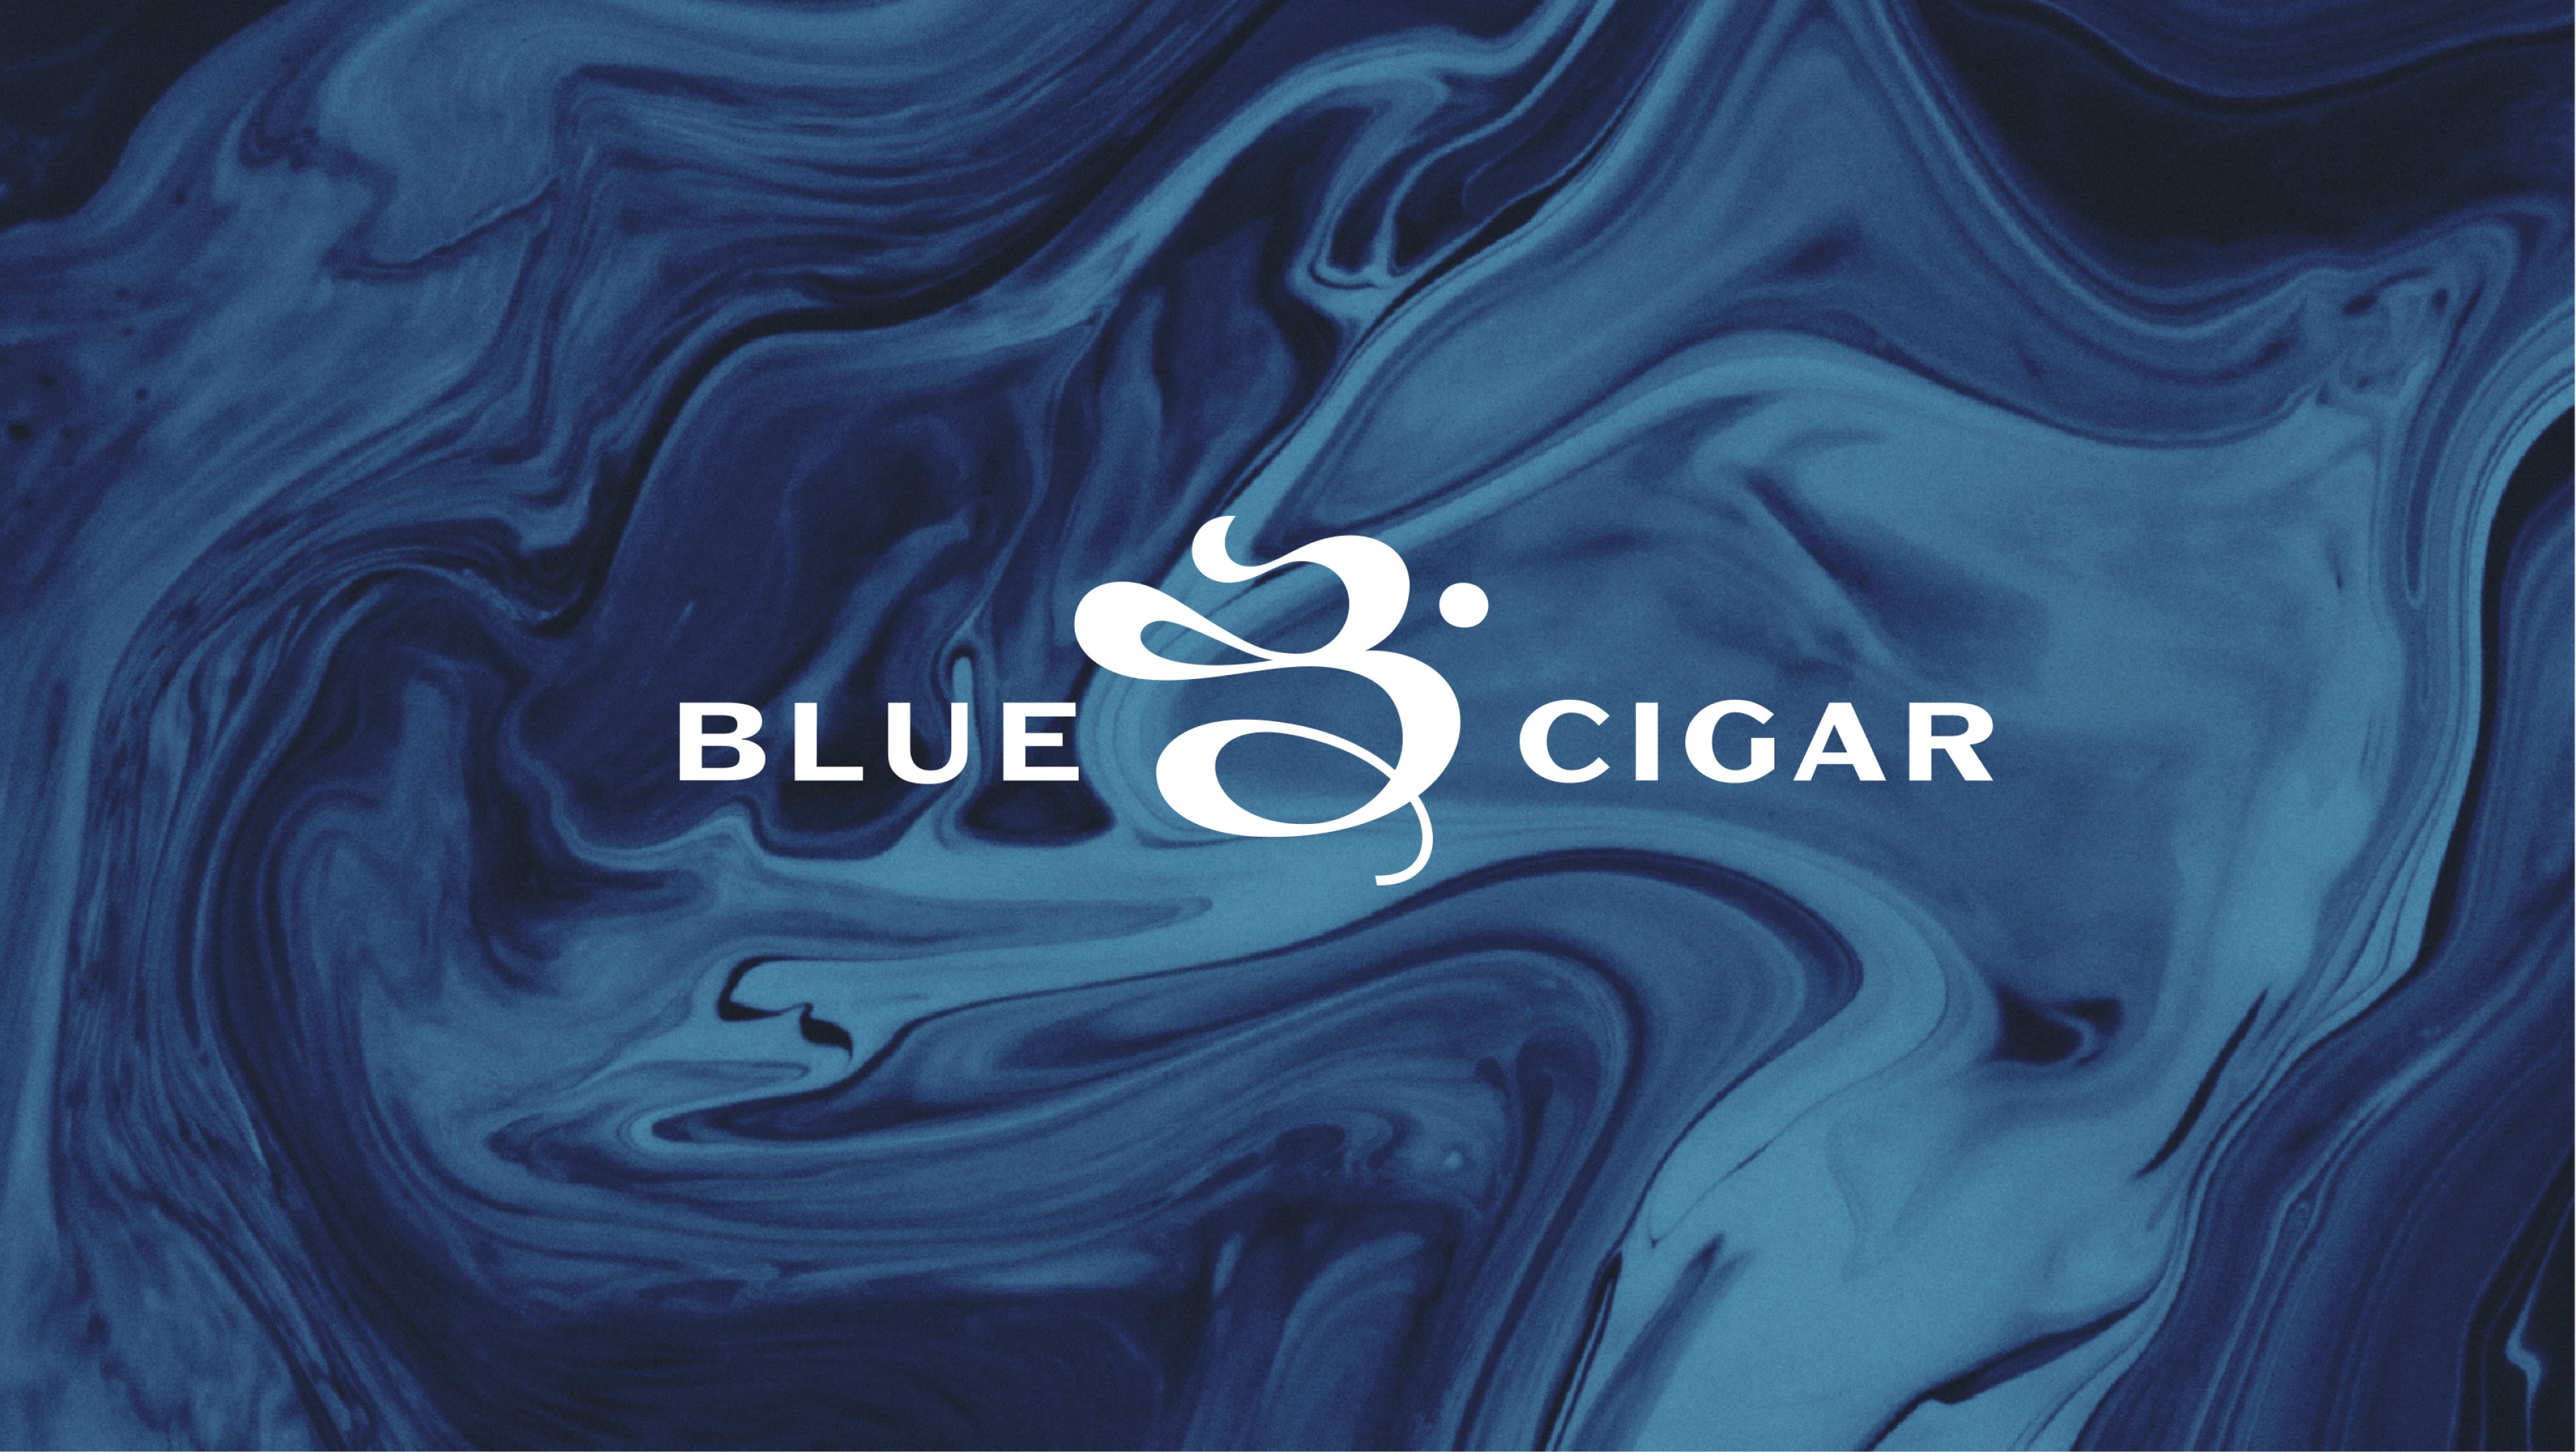 Blue cigar